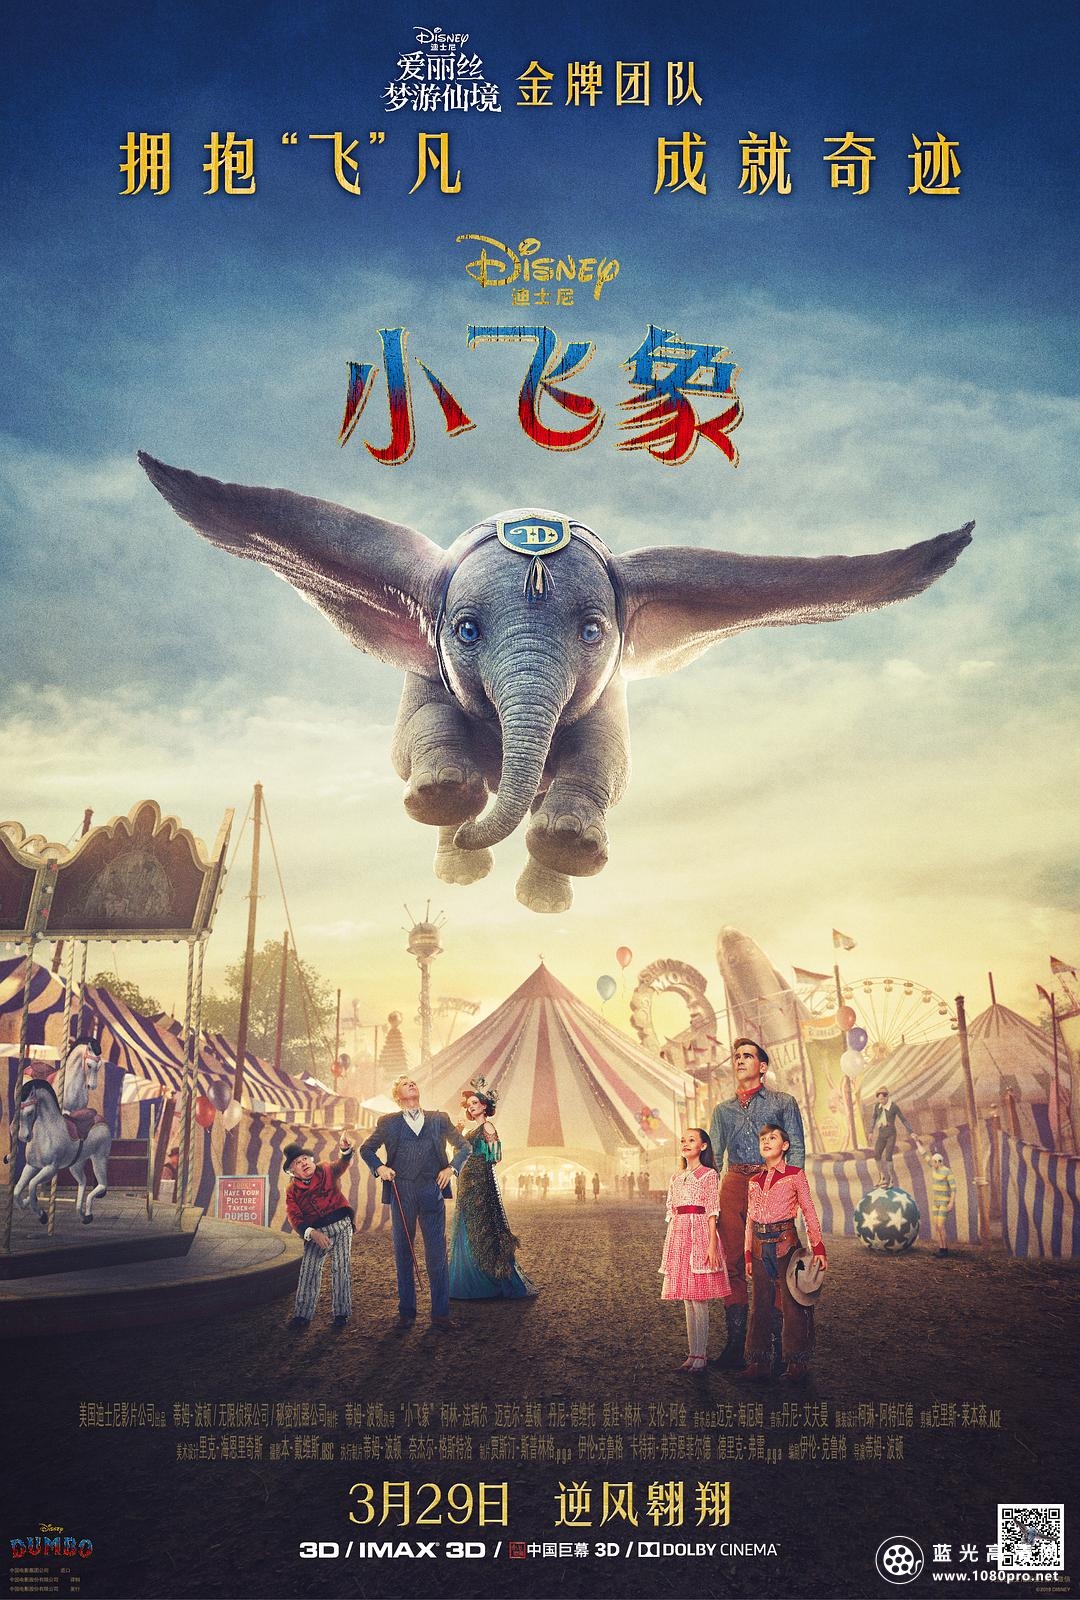 小飞象/小飞象真人版 Dumbo.2019.720p.BluRay.x264-SPARKS 5.47GB-1.png